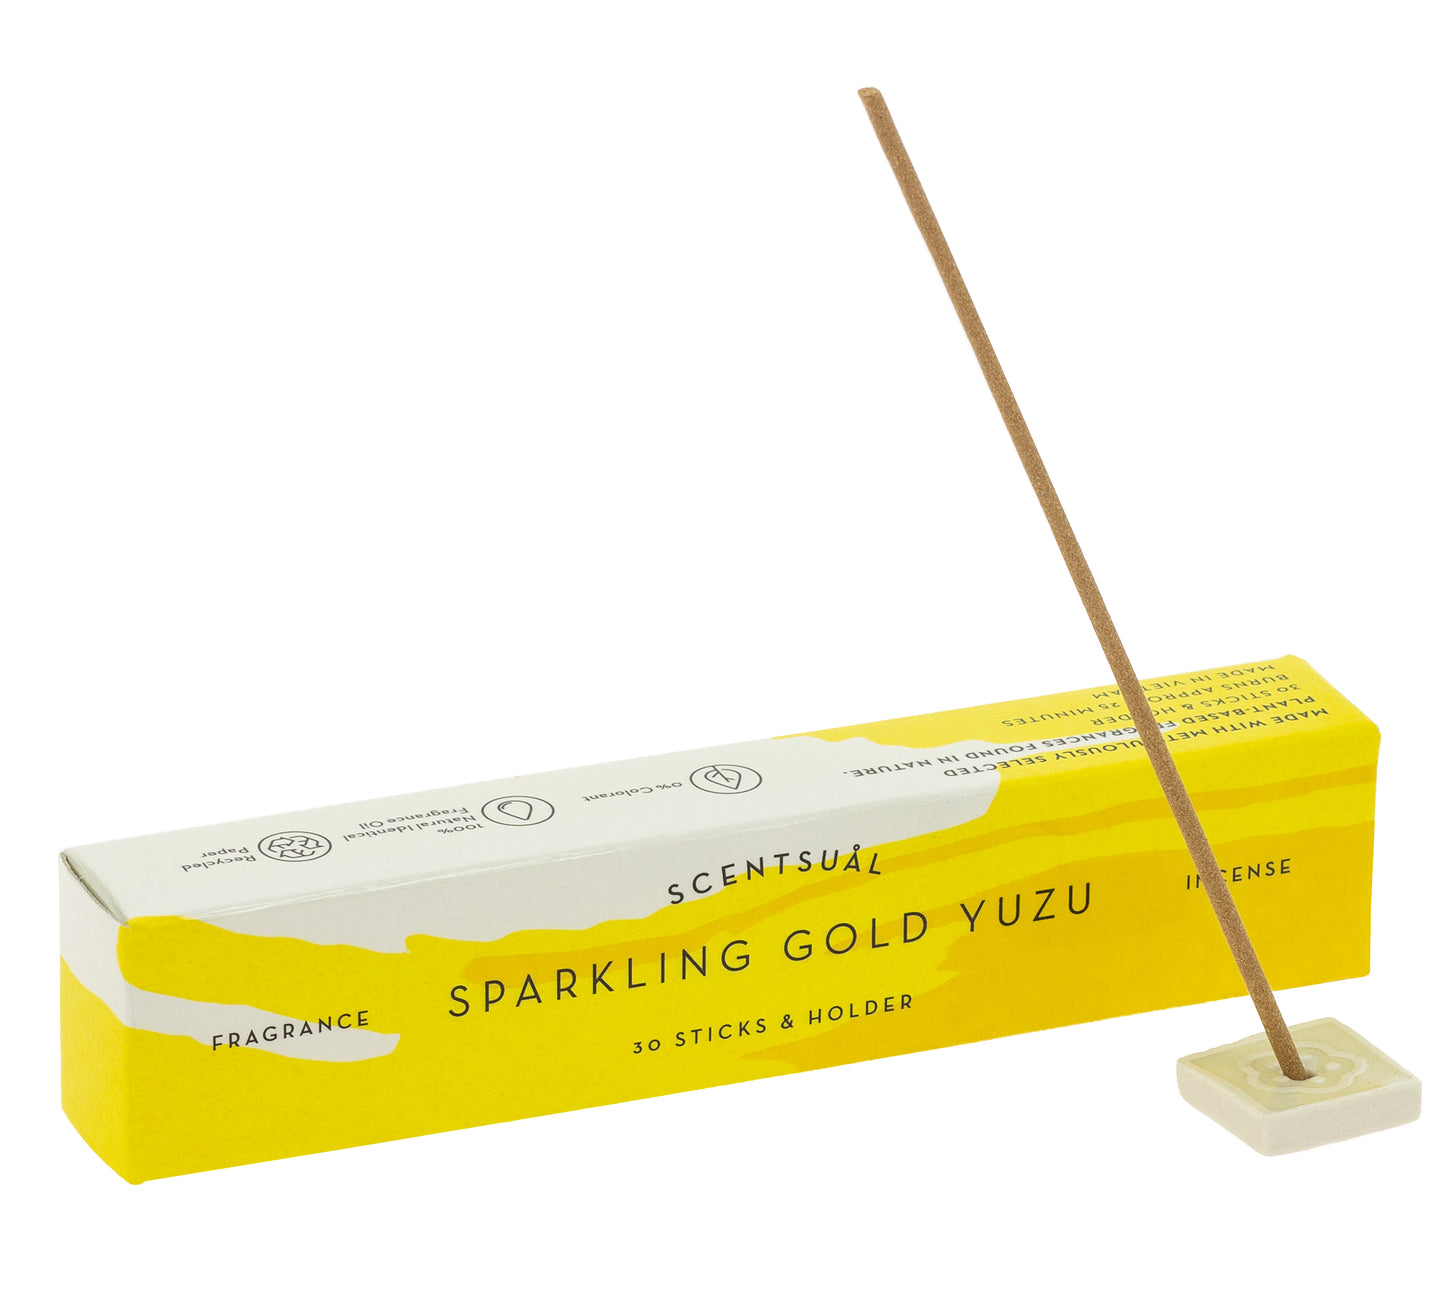 Scentsual Incense - Sparkling Gold Yuzu